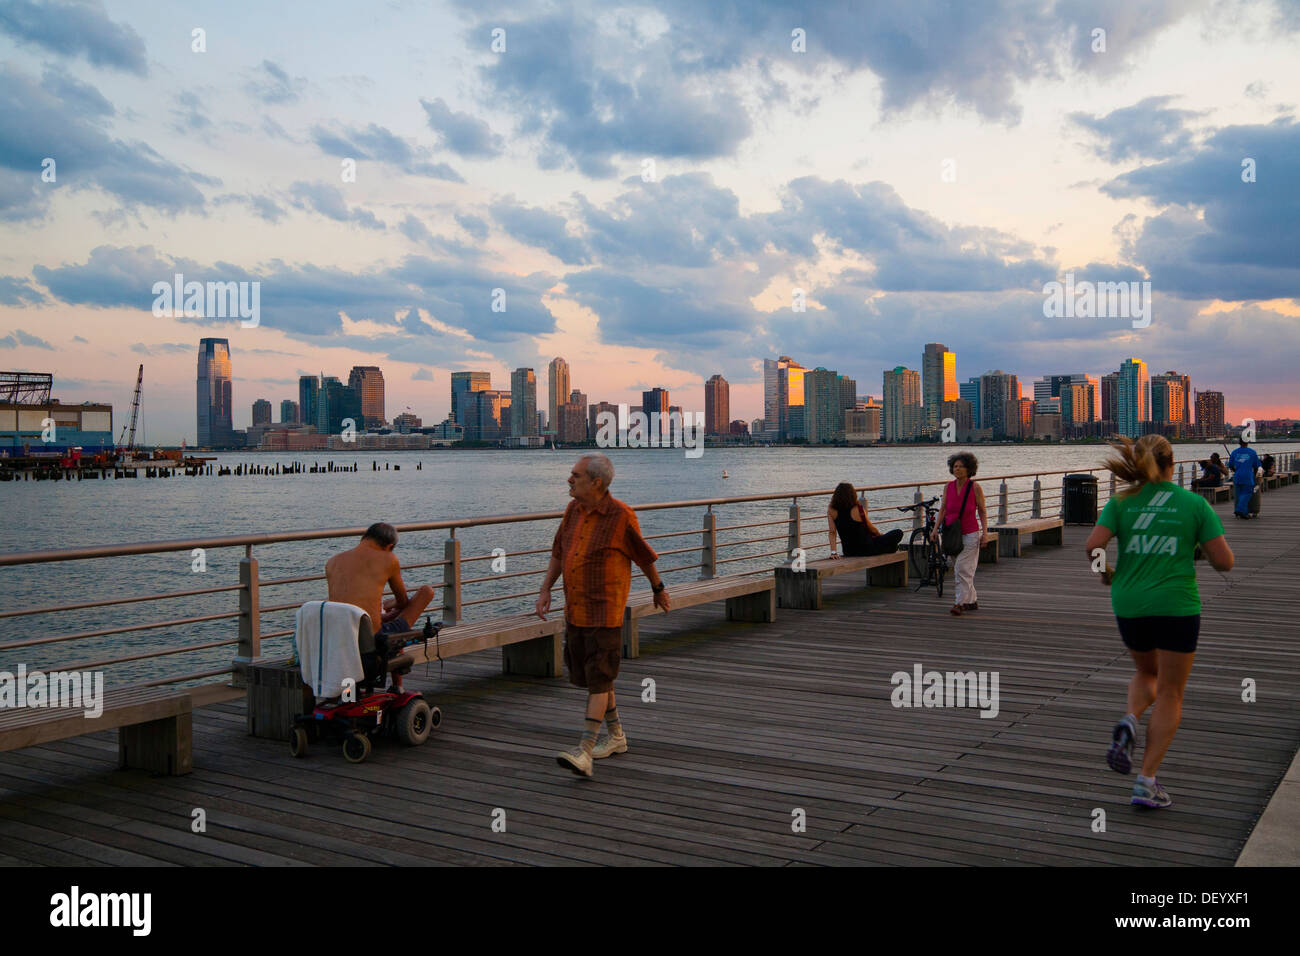 Pier 45, Hudson River Park, Greenwich Village, Lower West Side, Manhattan, New York City, USA Banque D'Images